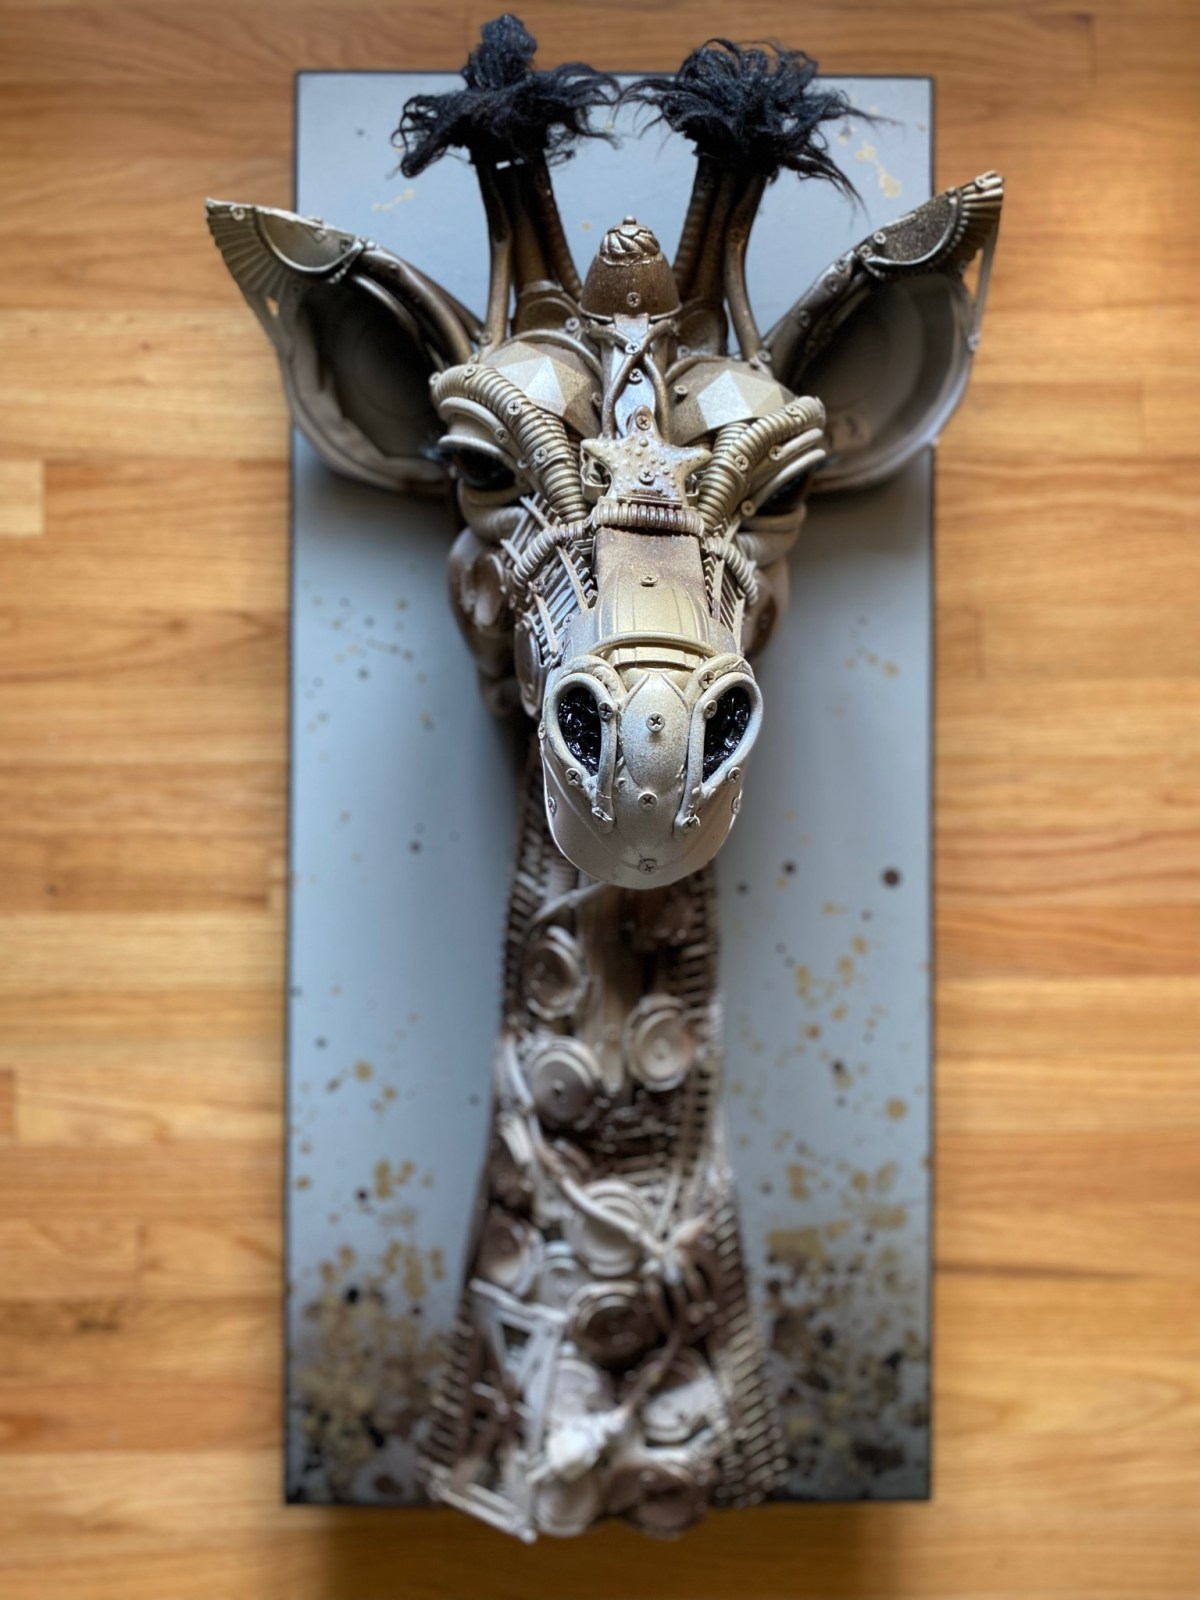 a giraffe sculpture by the artist Stephanie Hongo